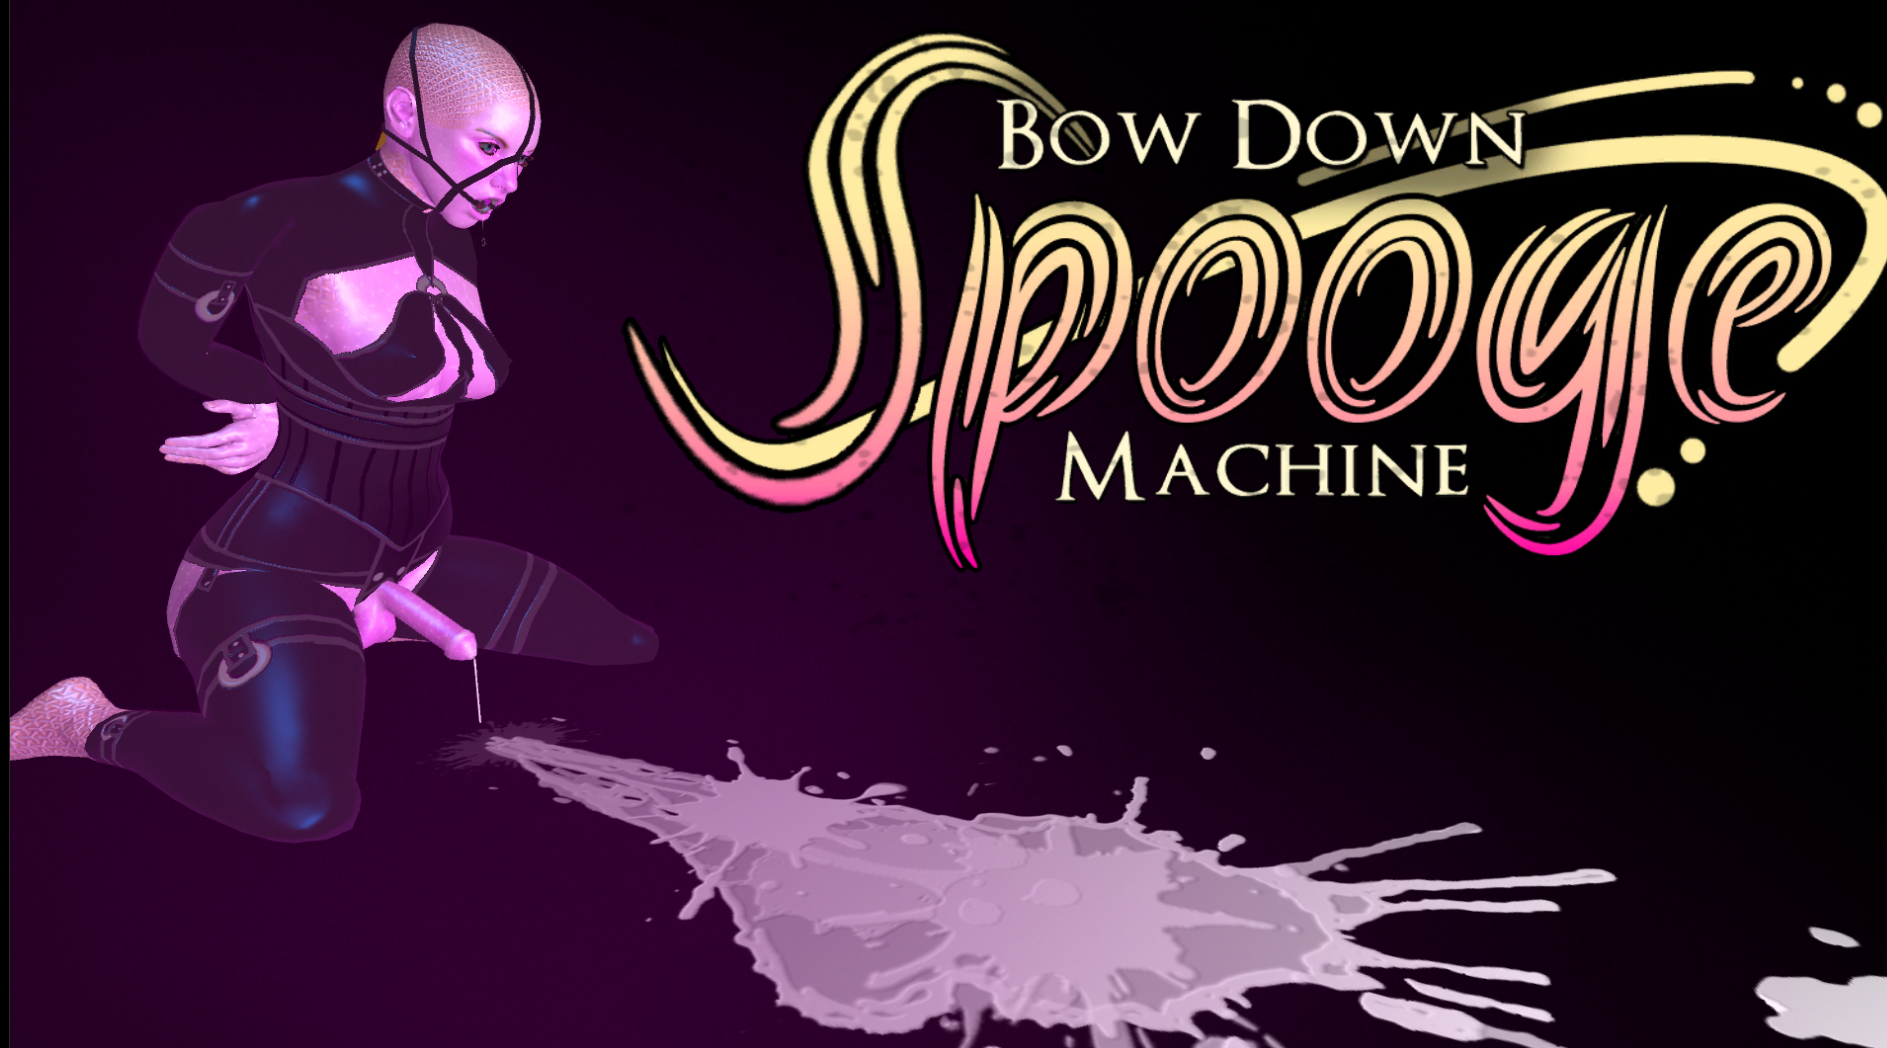 Bow Down Spooge Machine